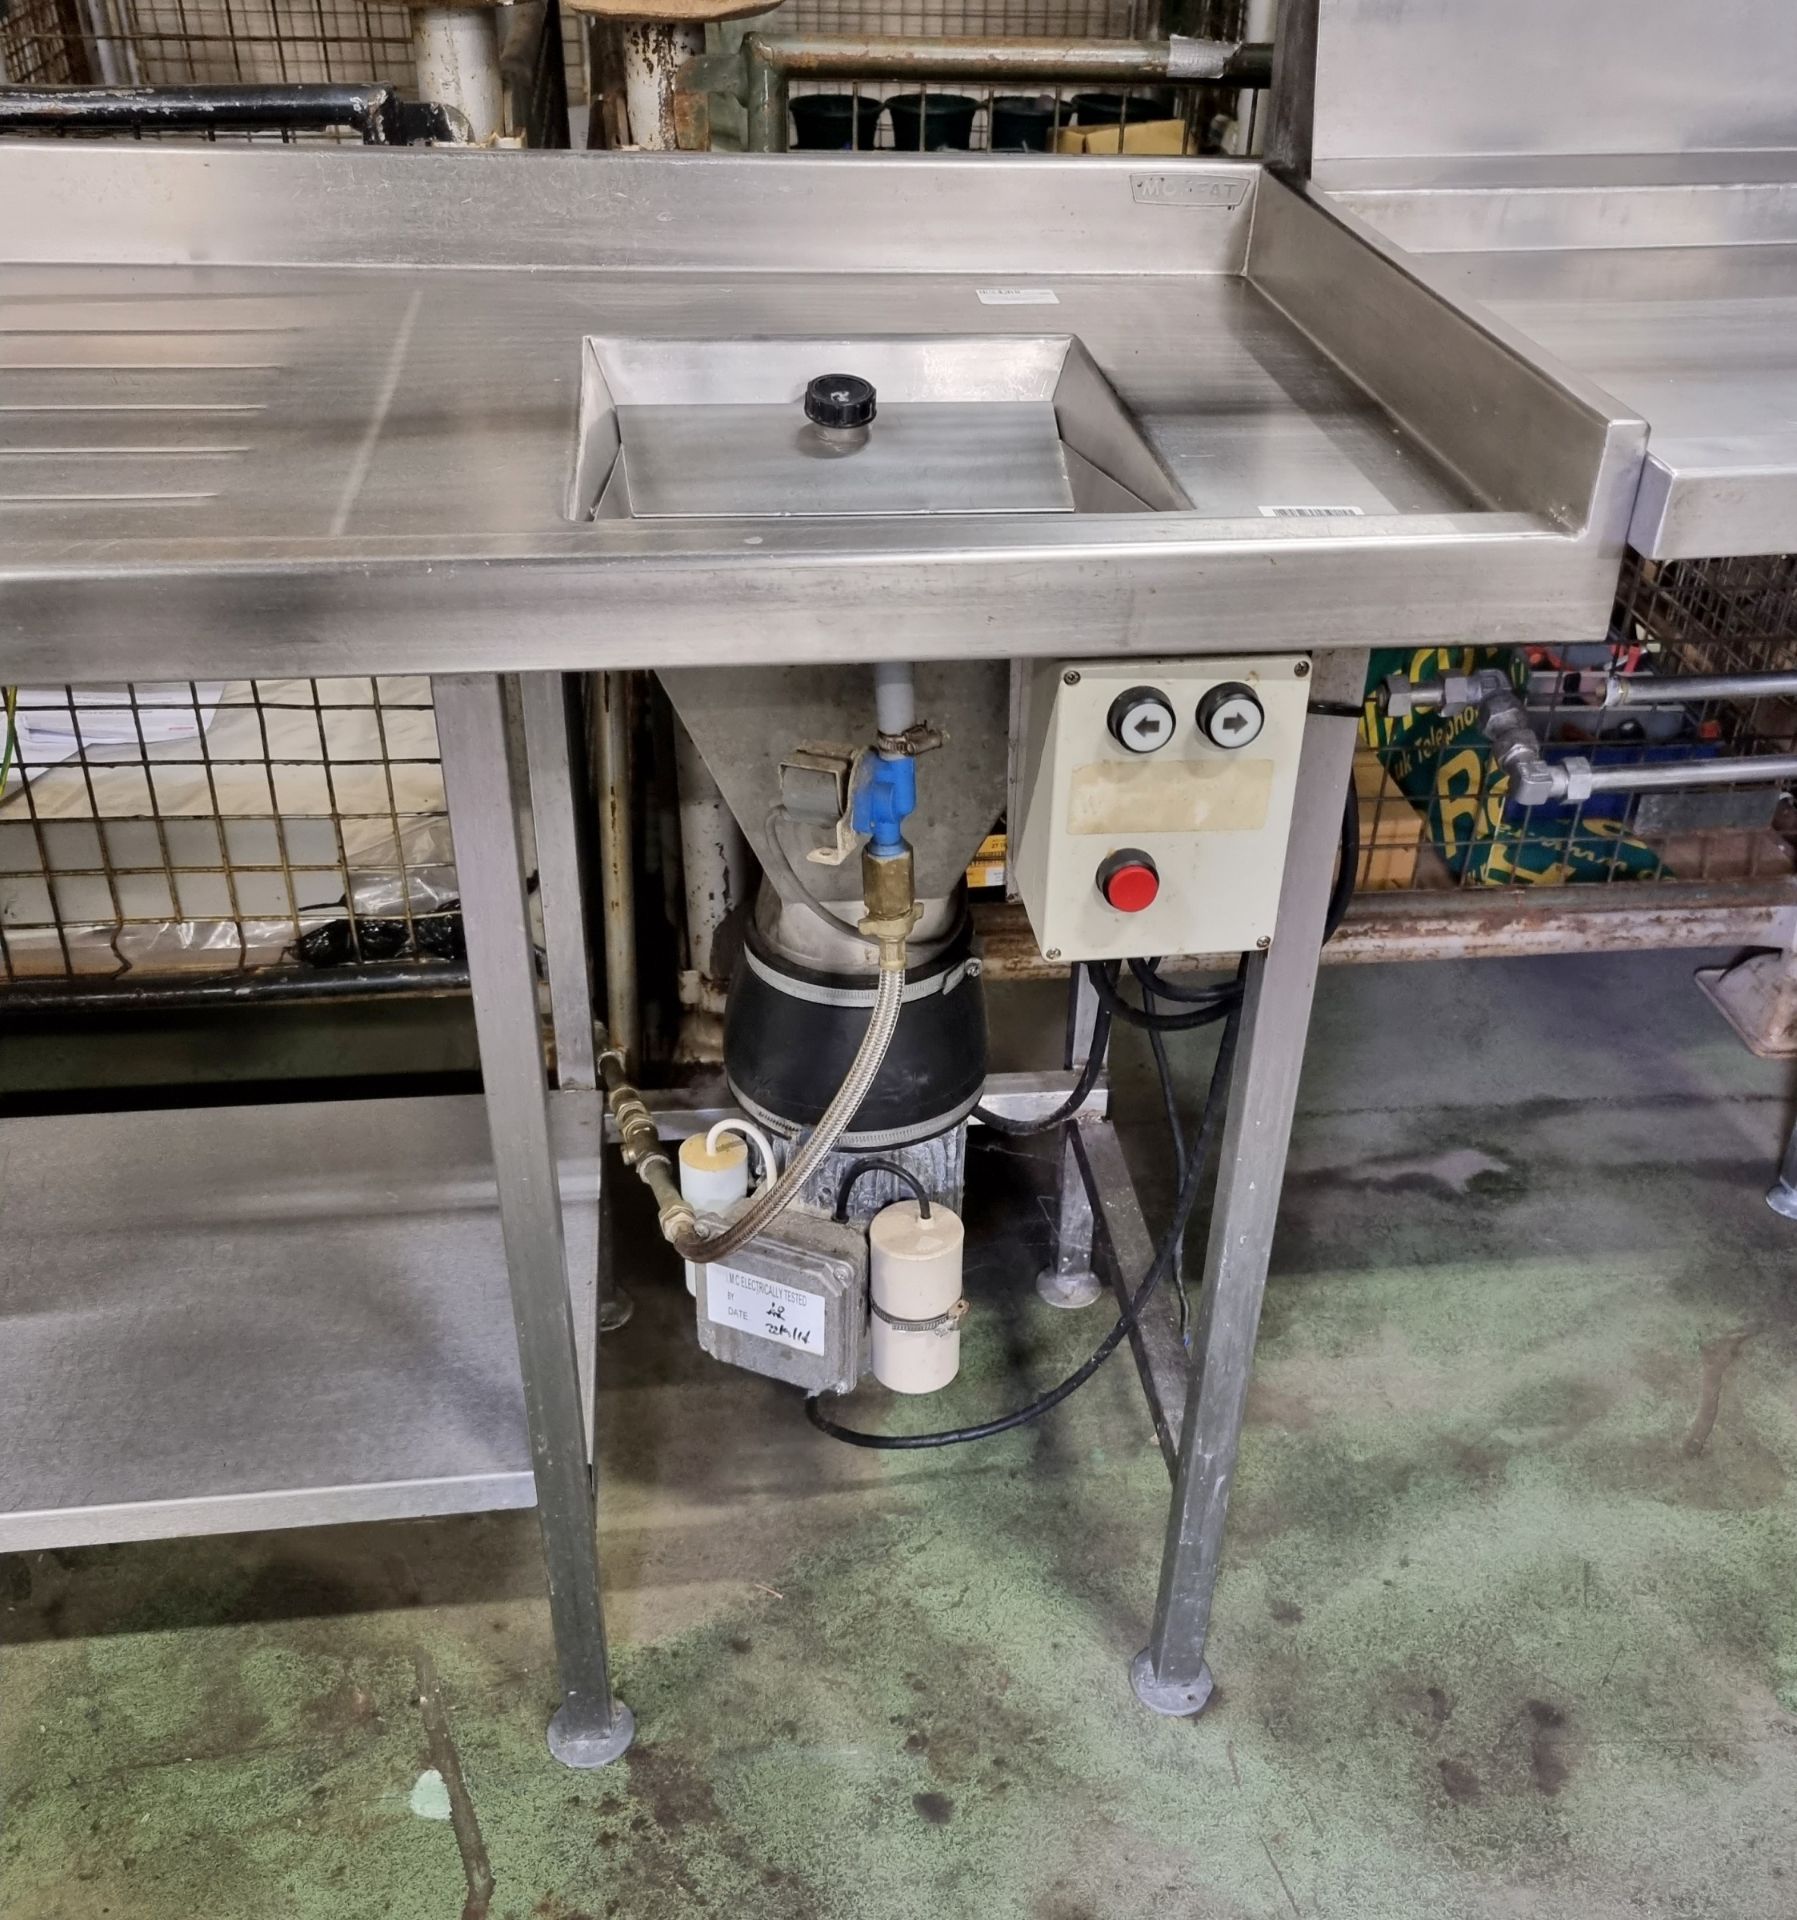 Stainless steel double sink unit with waste disposal - 330x60x90cm - Bild 2 aus 6